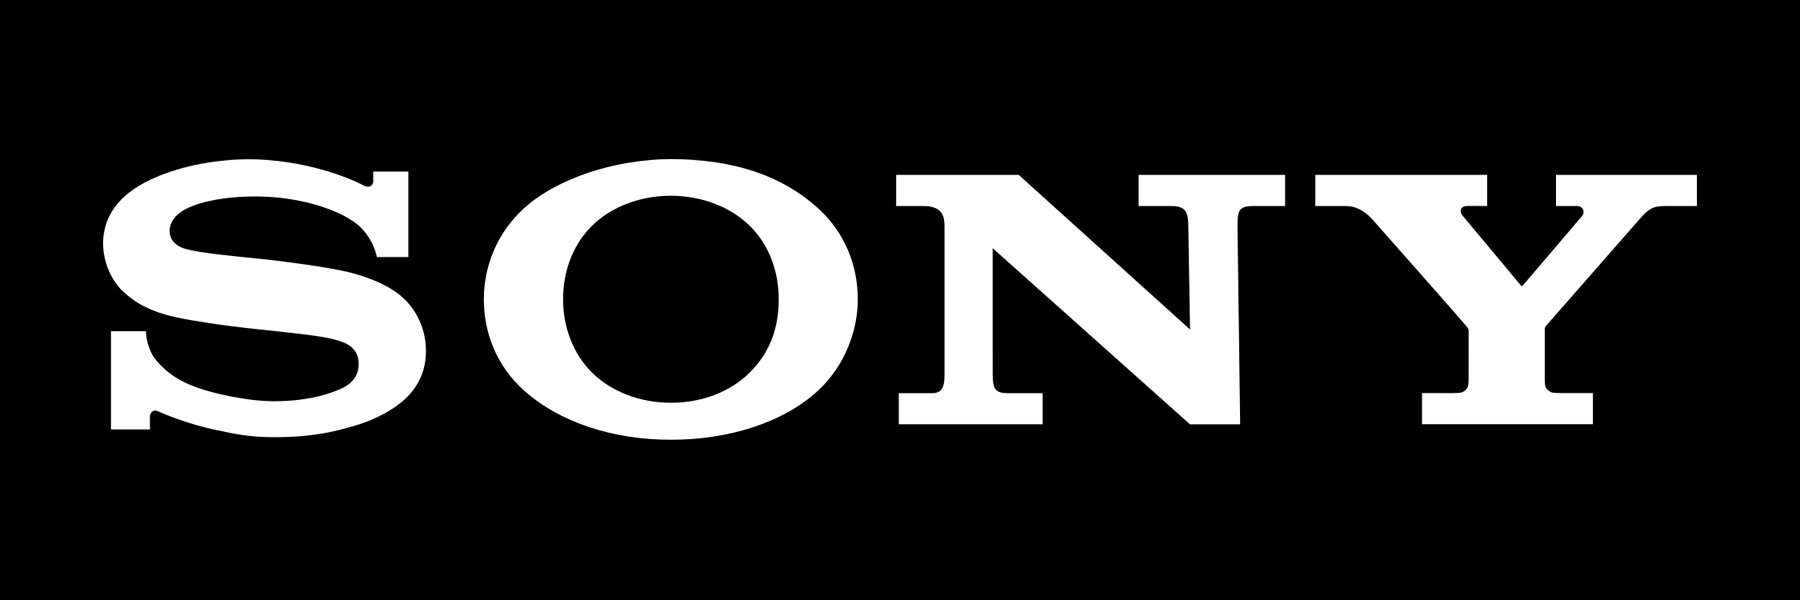 Sony logo black back.jpeg